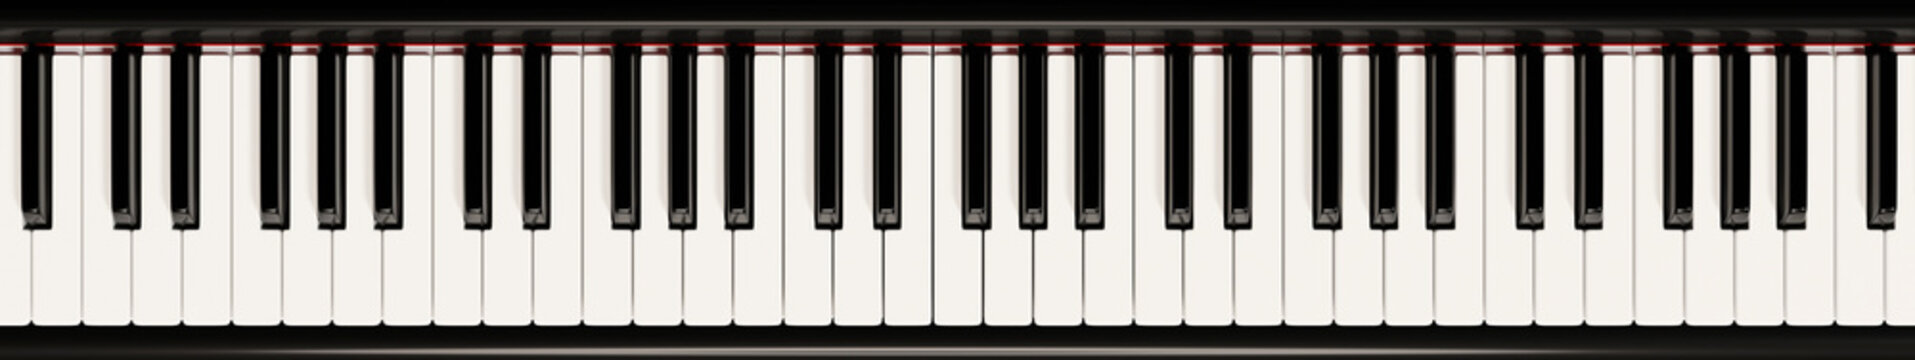 Piano keyboard close up view 3D illustration